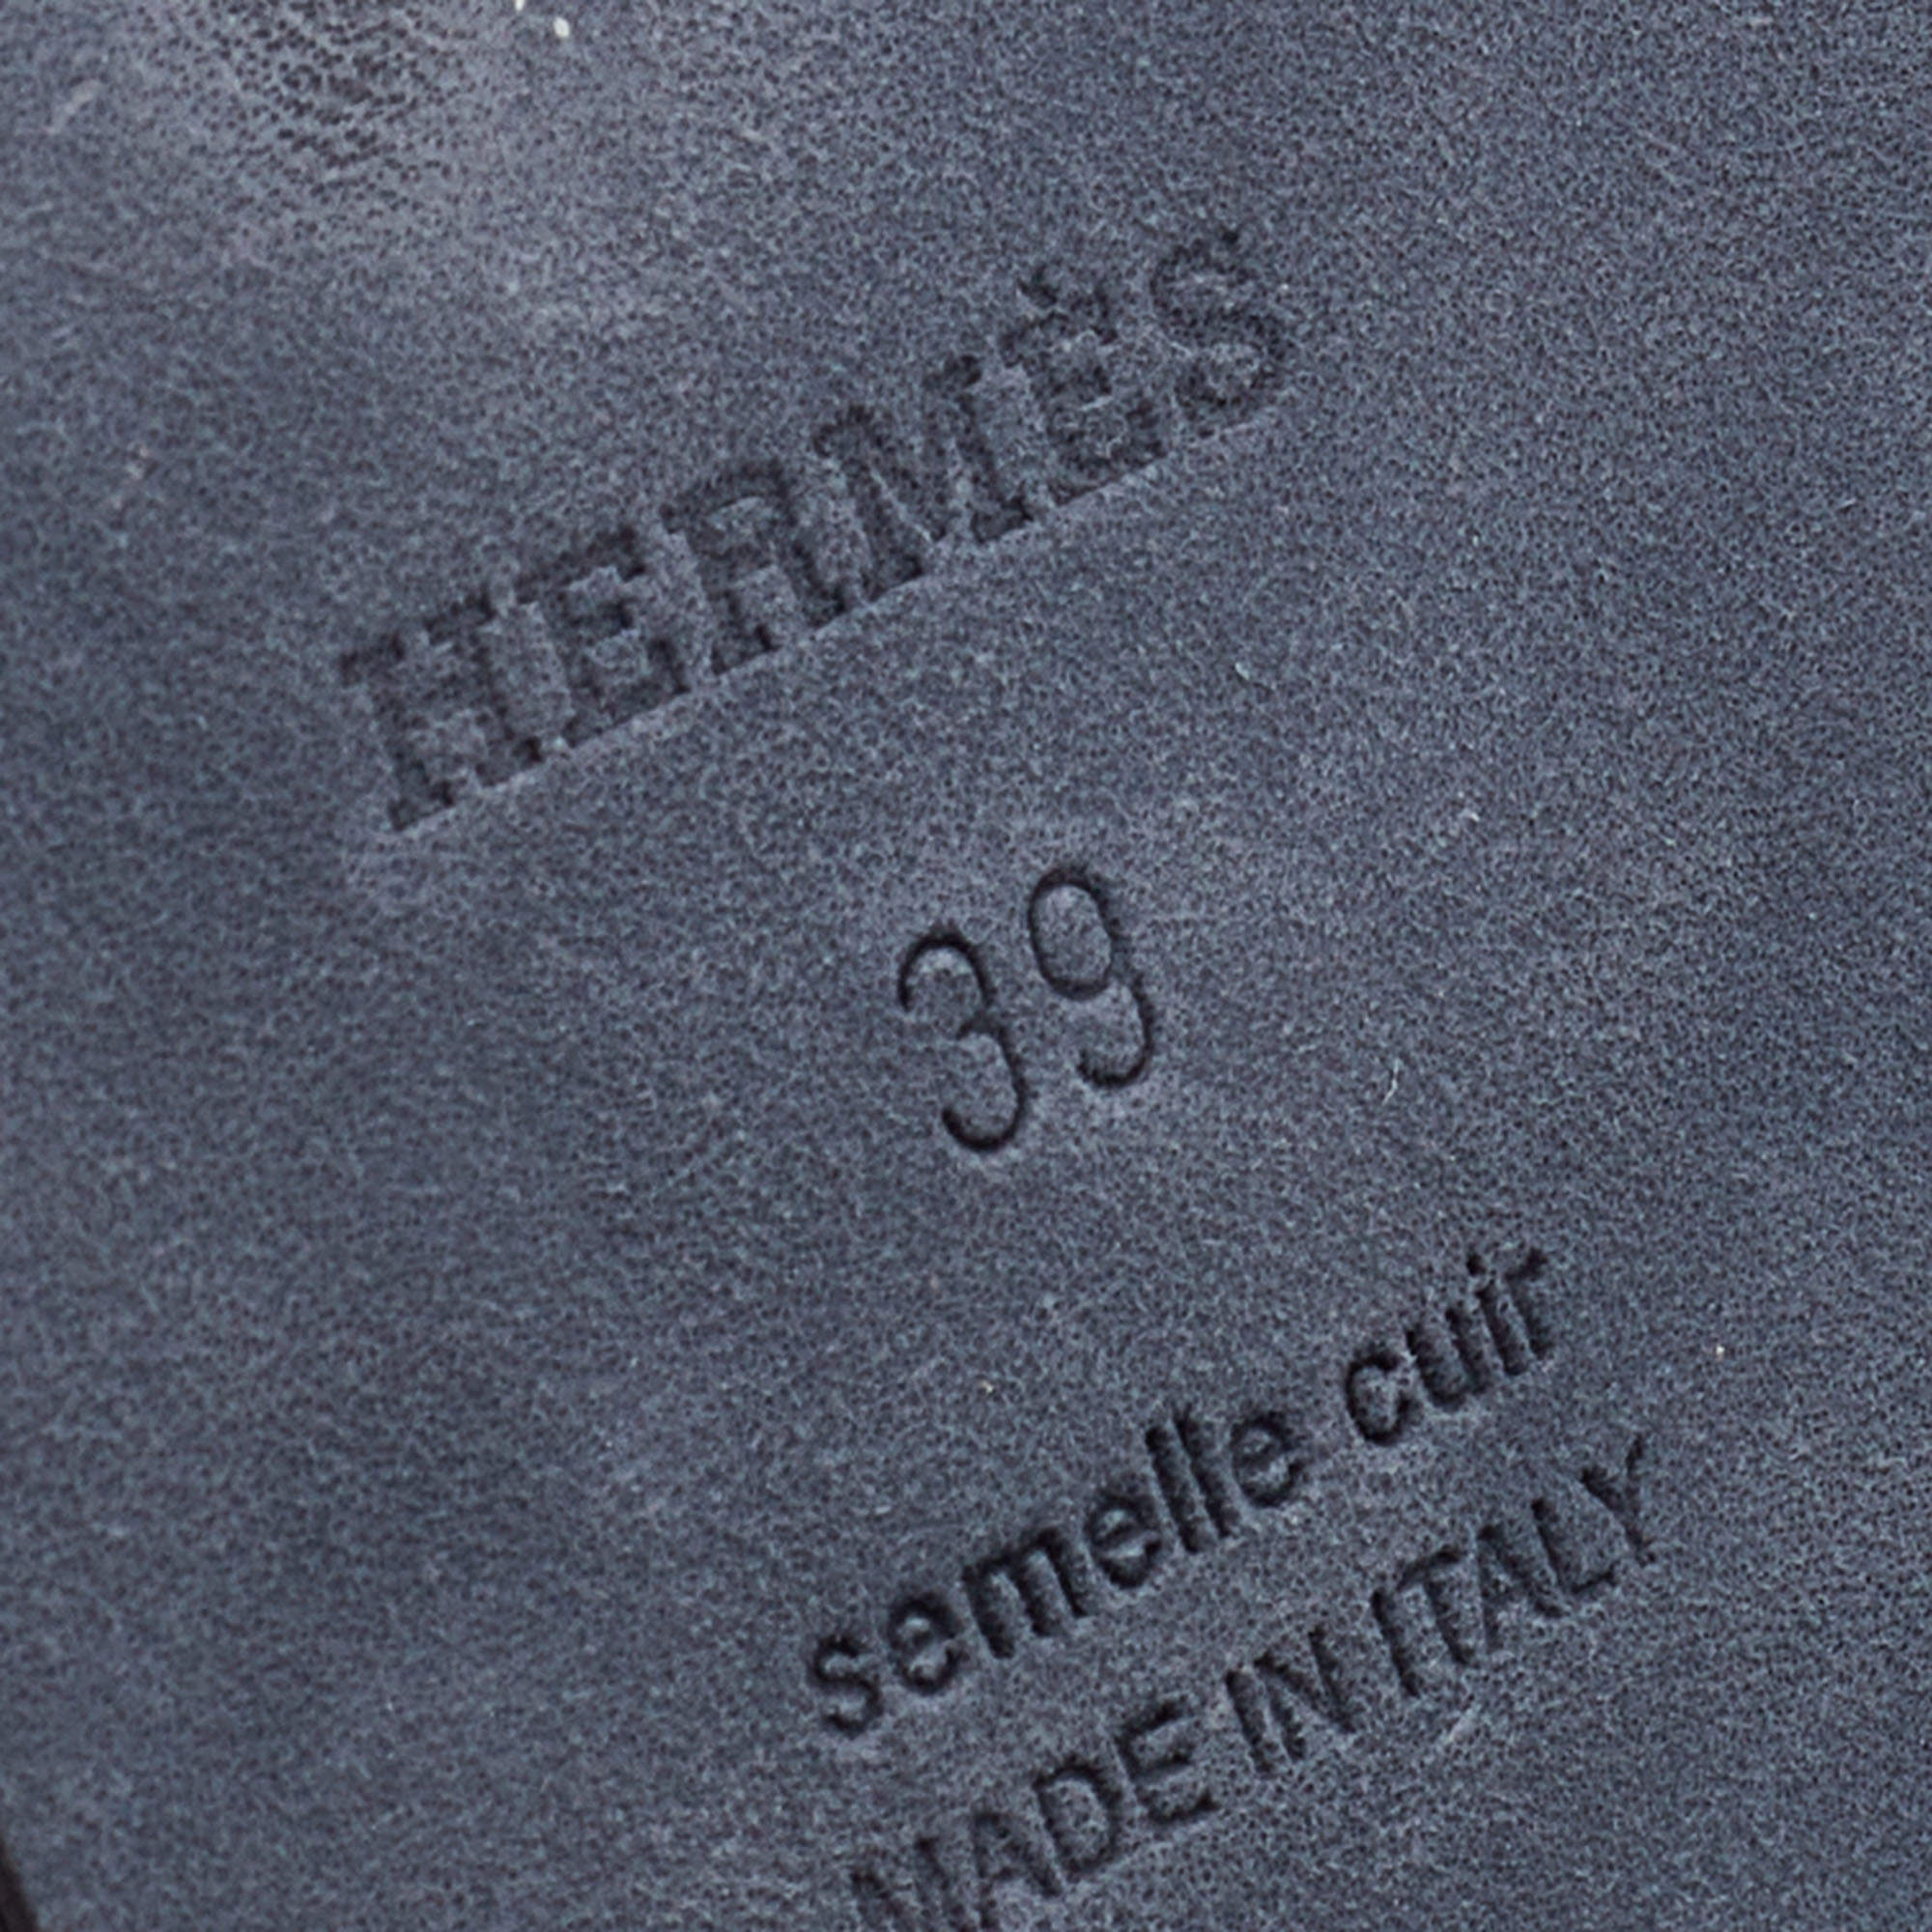 Hermes Emerald Oran Sandal Epsom Leather Flat Shoes 39 / 9 New w/ Box –  Mightychic